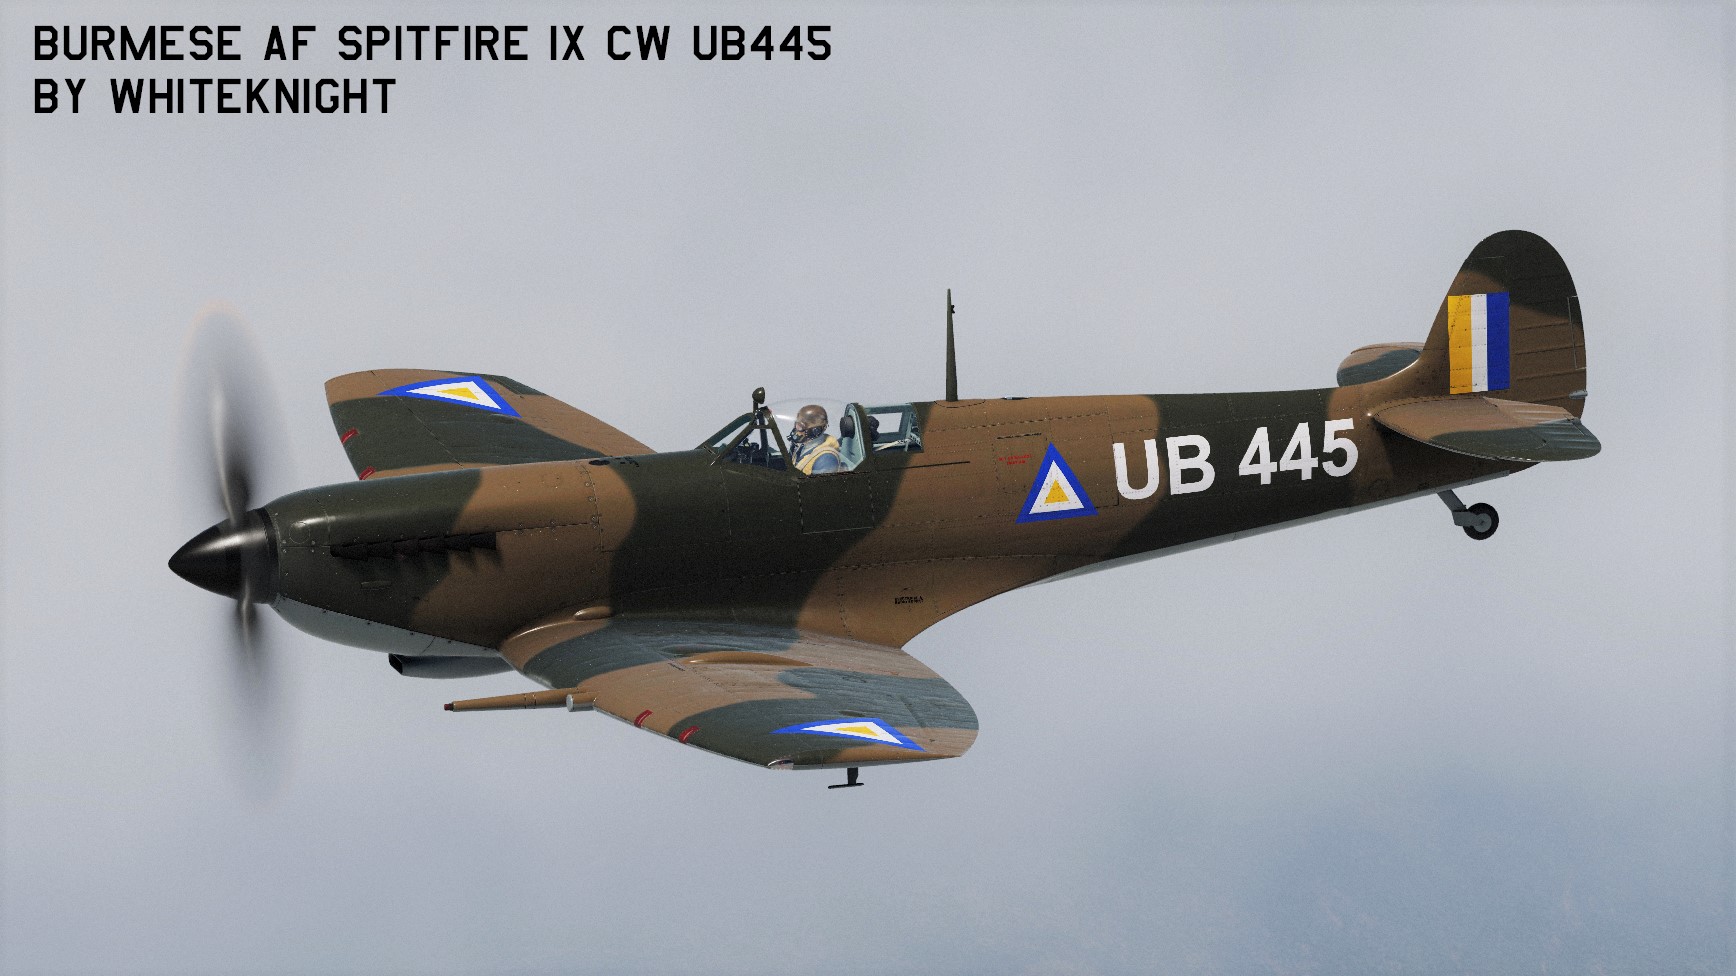 Burmese Air Force Spitifire IX CW "UB445"